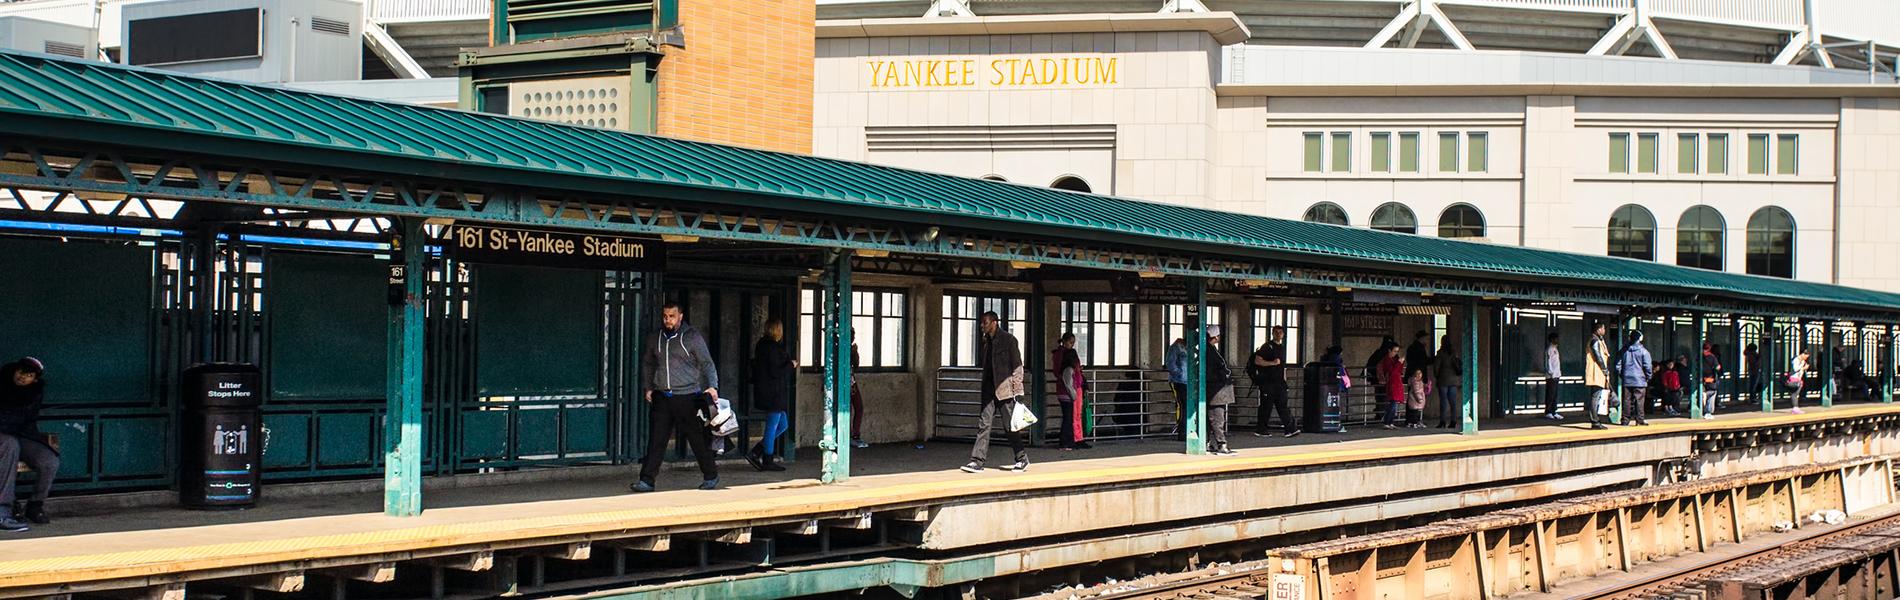 Subway station at Yankee Stadium